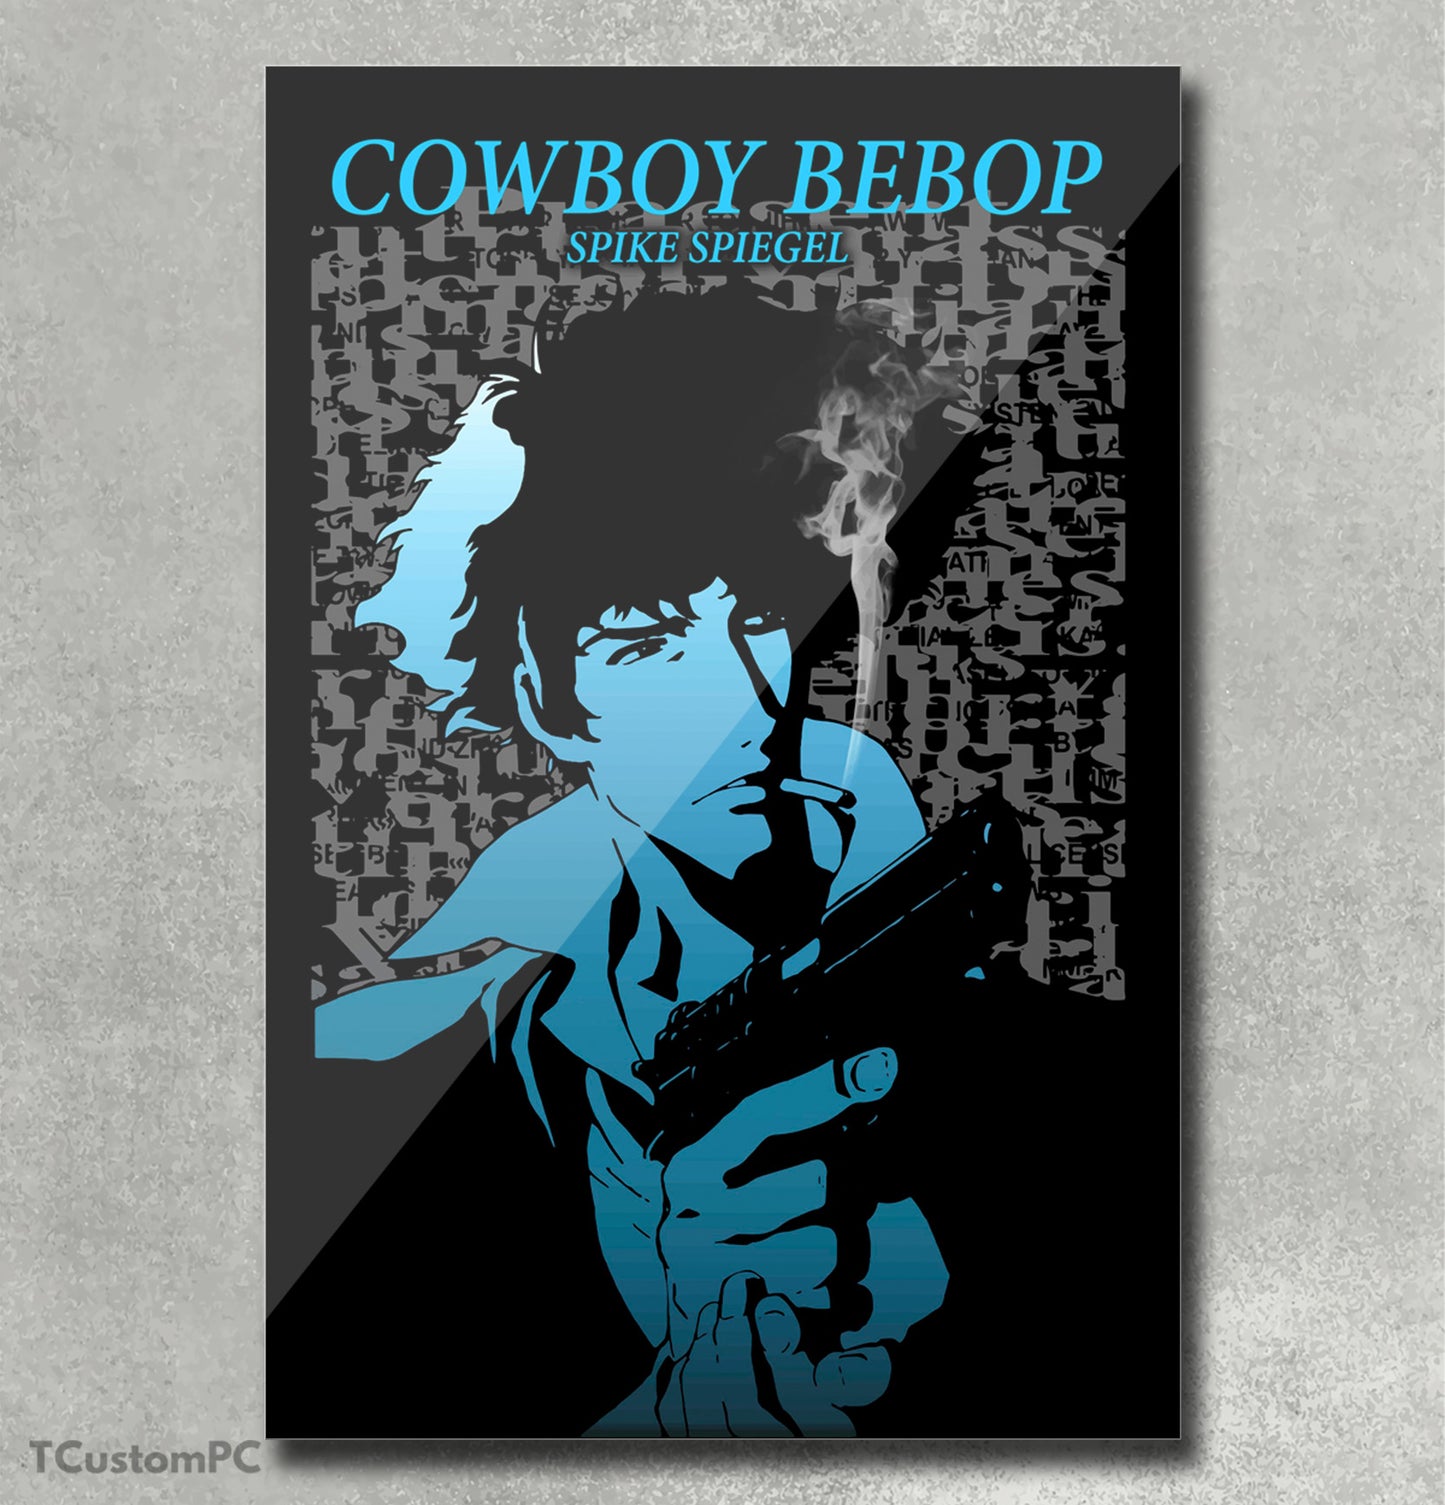 Cuadro Cowboy bebop blue spike